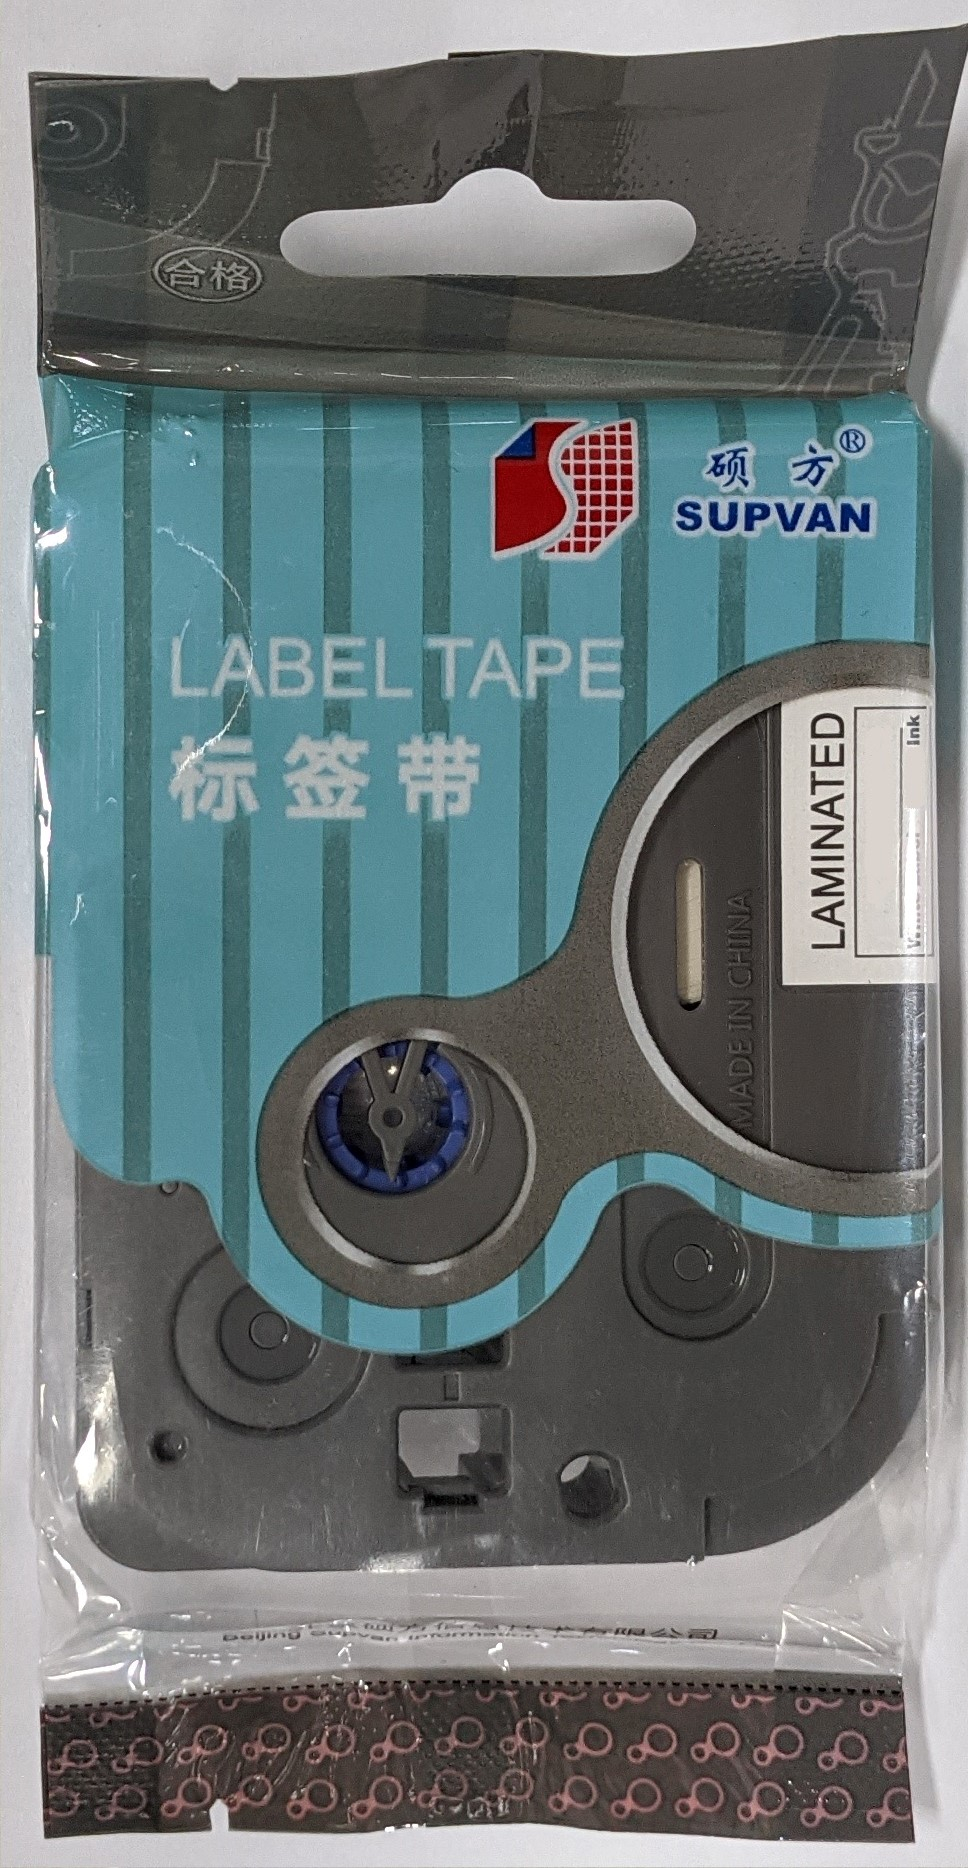 Samolepicí páska Supvan L-315E, 6mm x 8m, bílý tisk / černý podklad, laminovaná